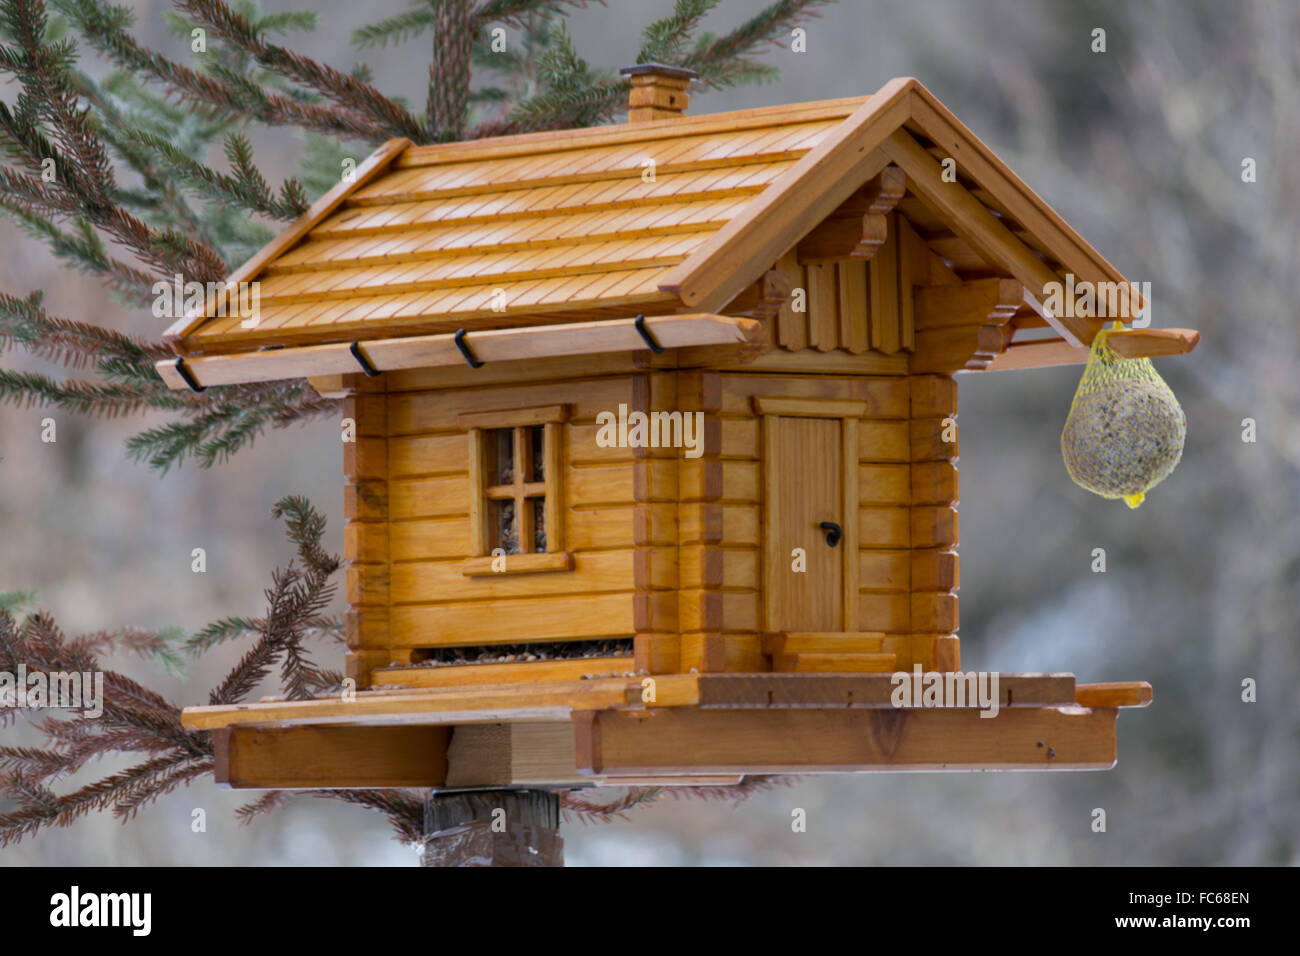 exquisite solid wood birdhouses Stock Photo